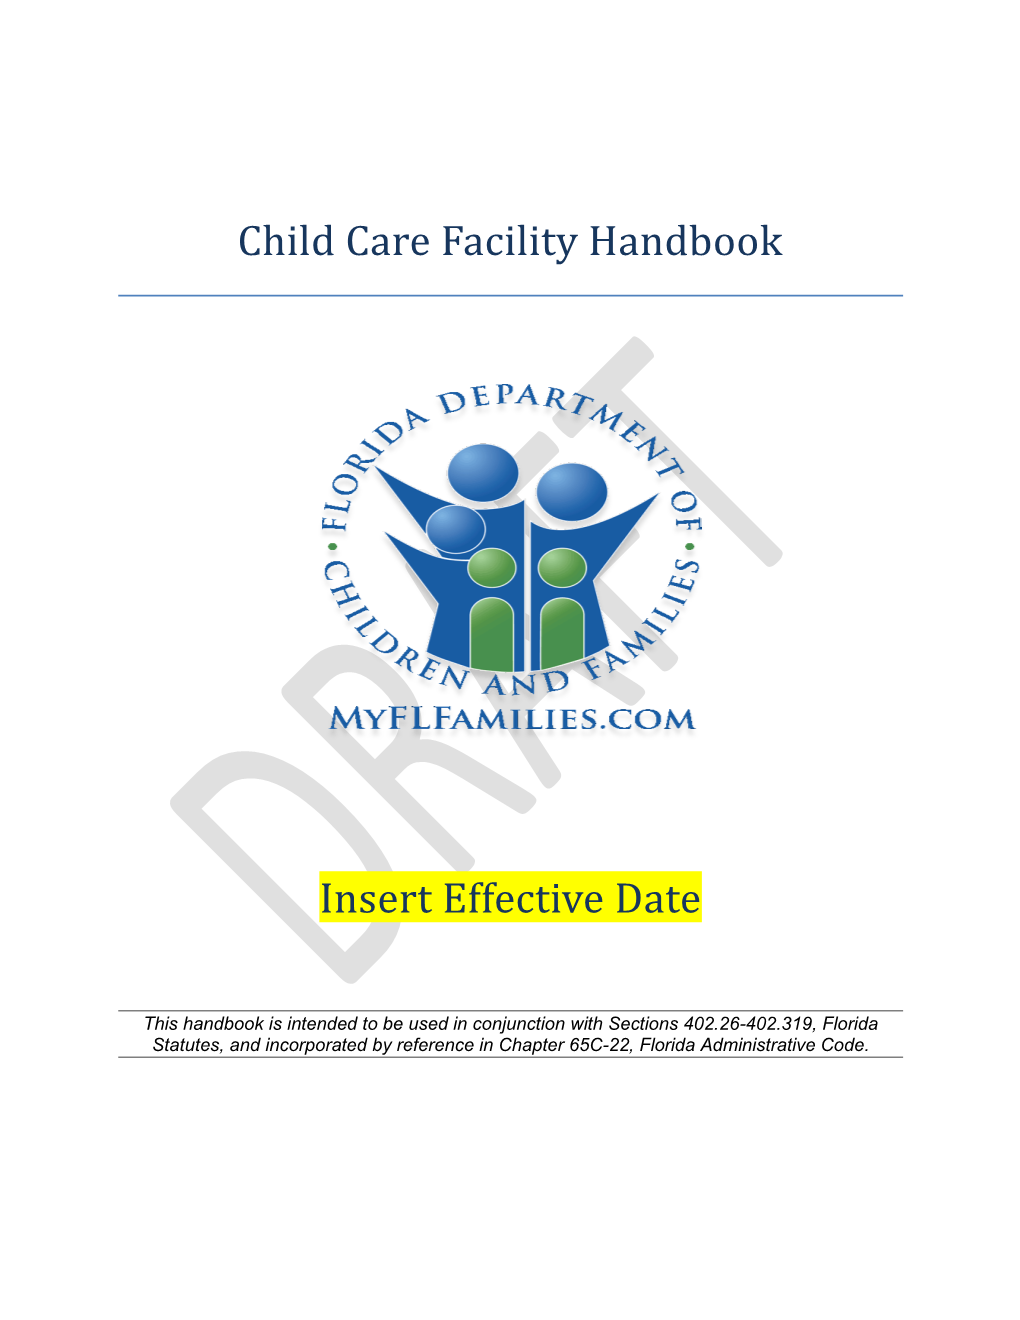 Child Care Facility Handbook Insert Effective Date